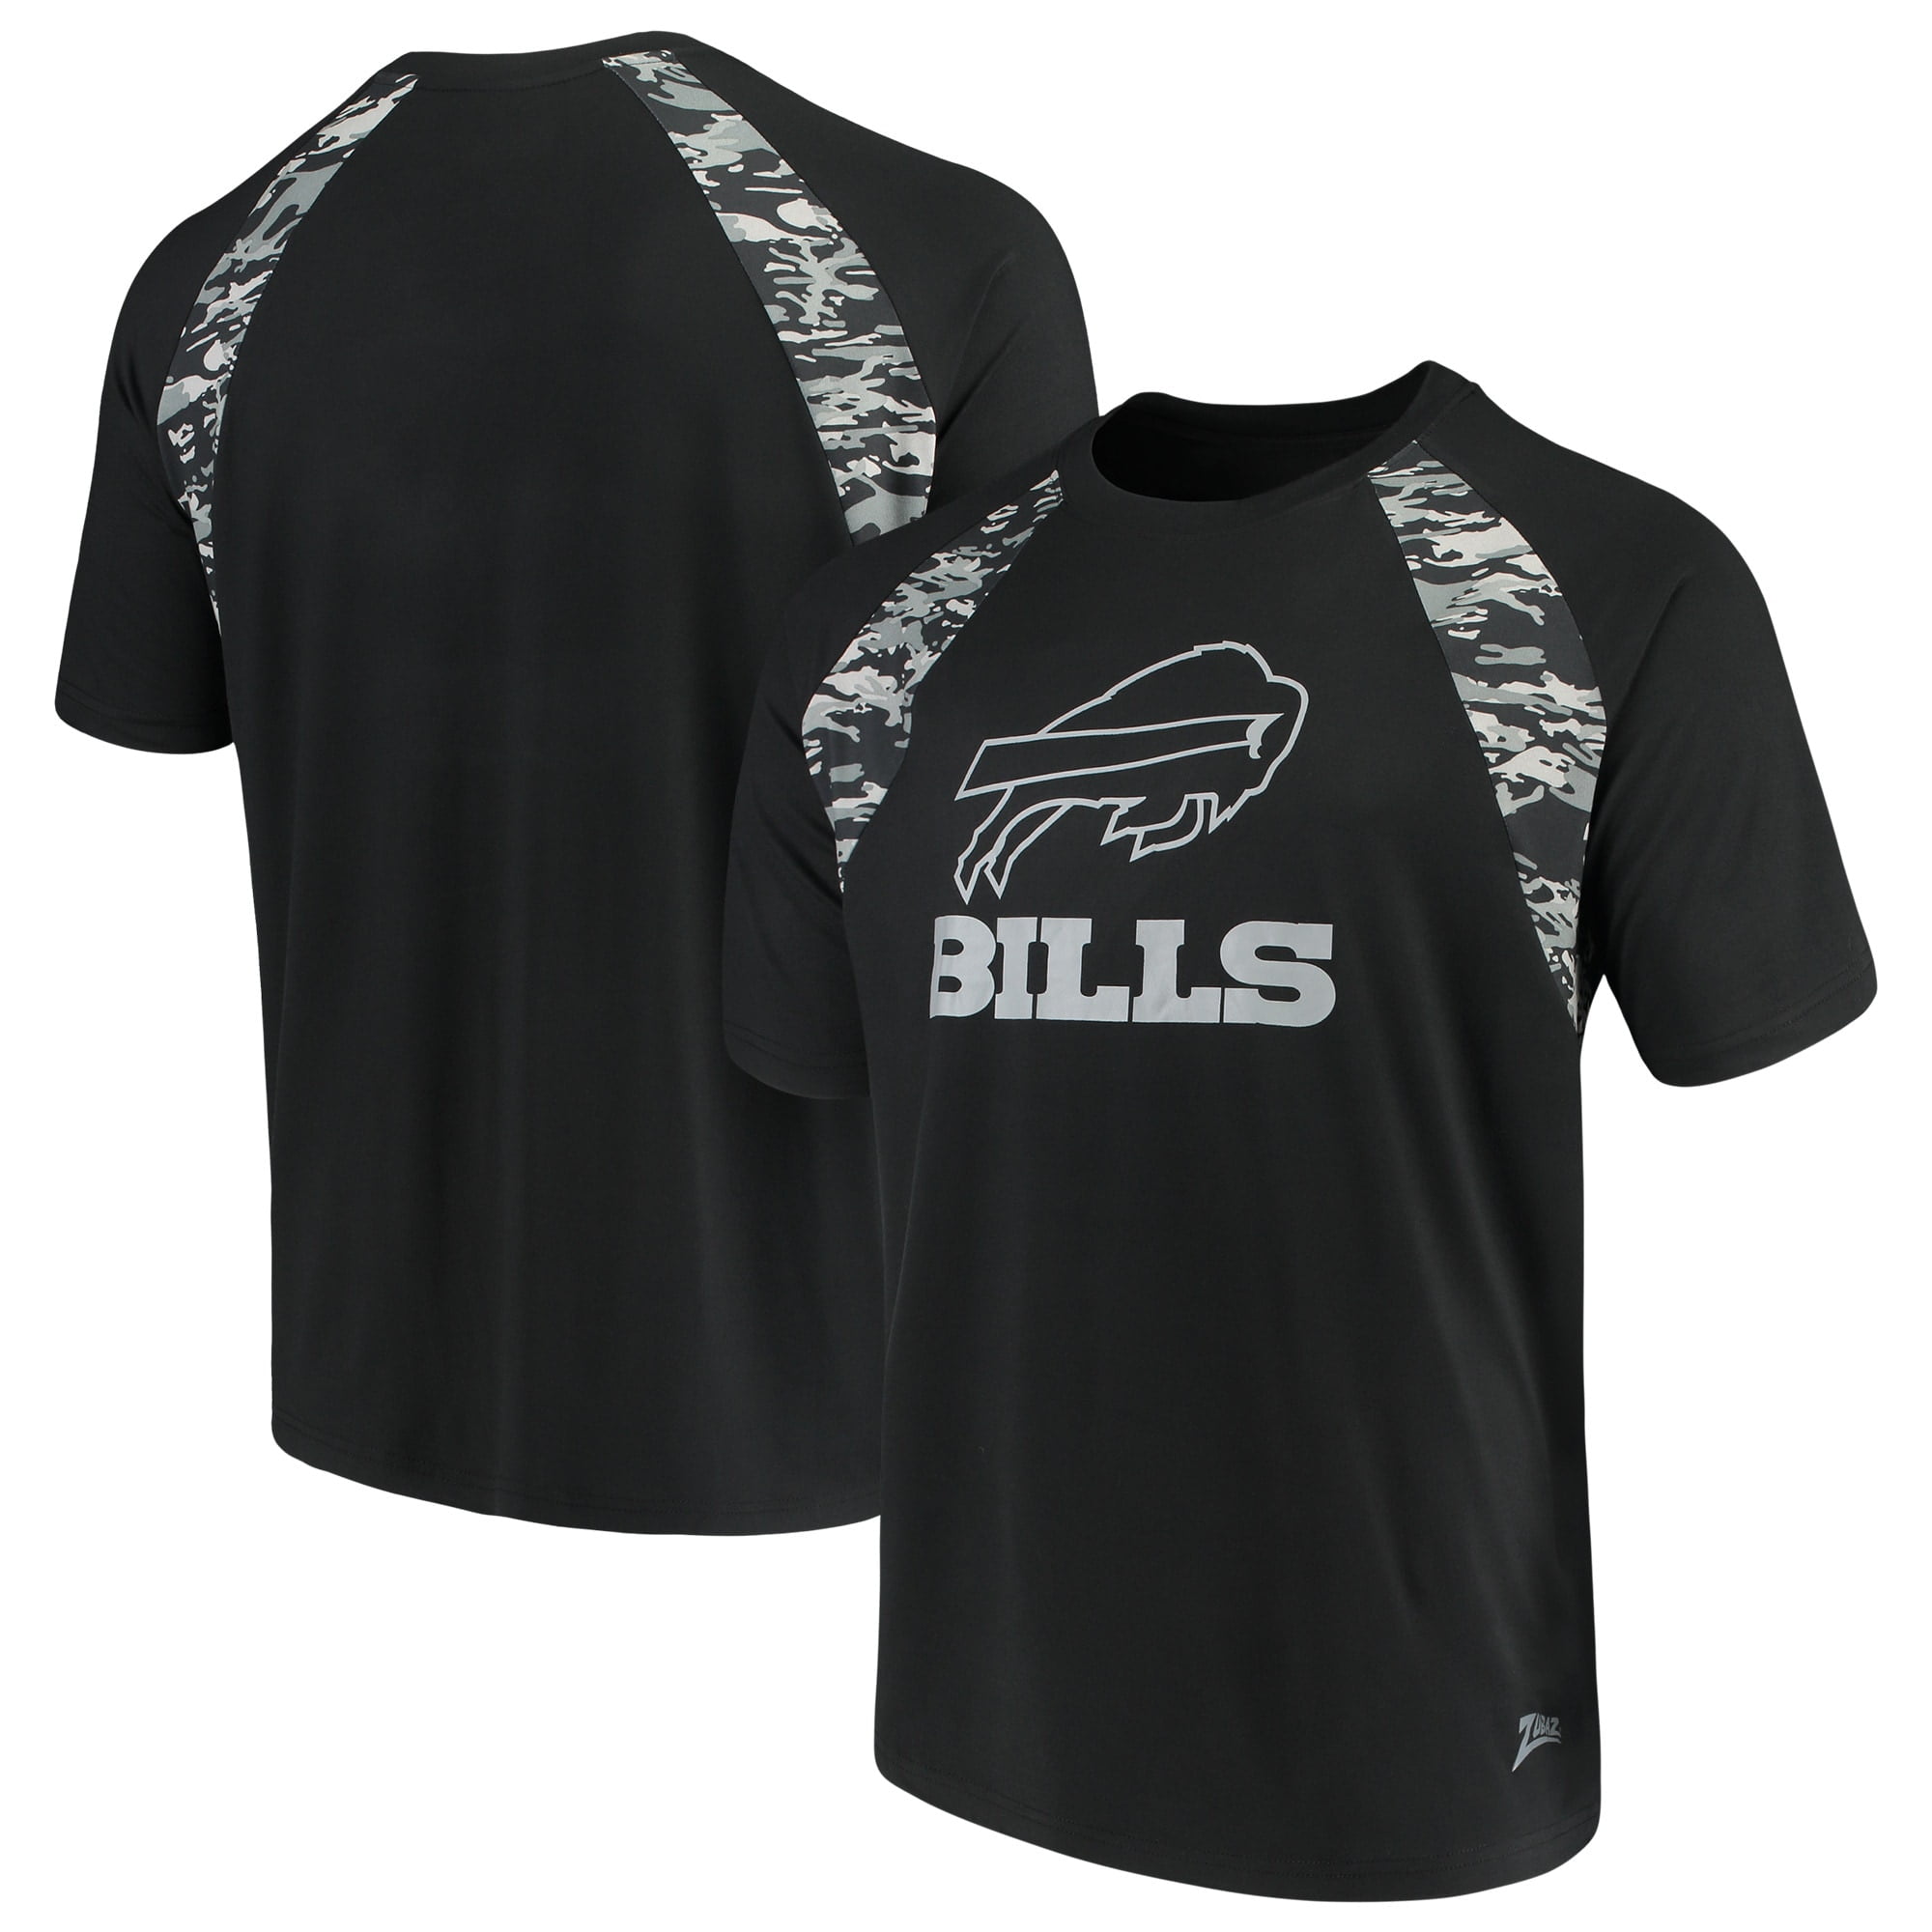 buffalo bills zubaz shirt